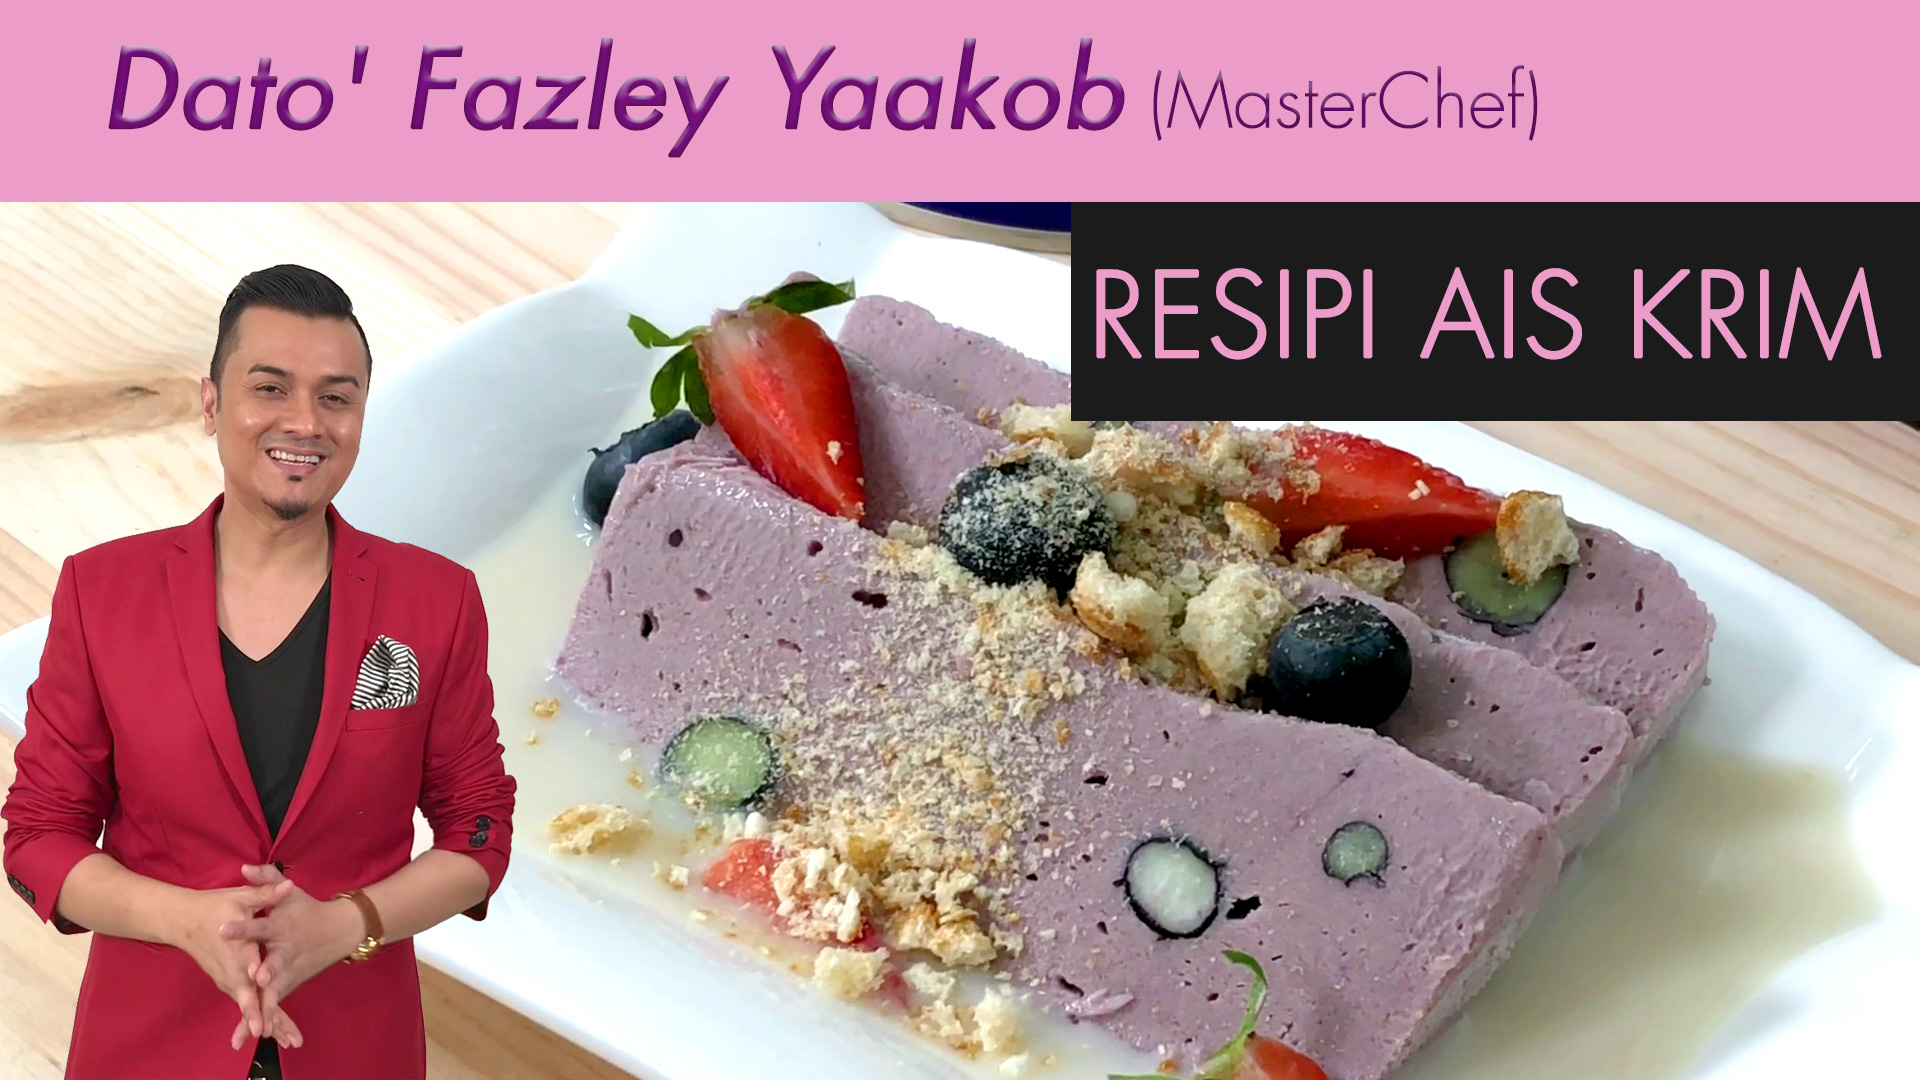 Resipi Ais Krim oleh Chef Dato’ Fazley Yaakob